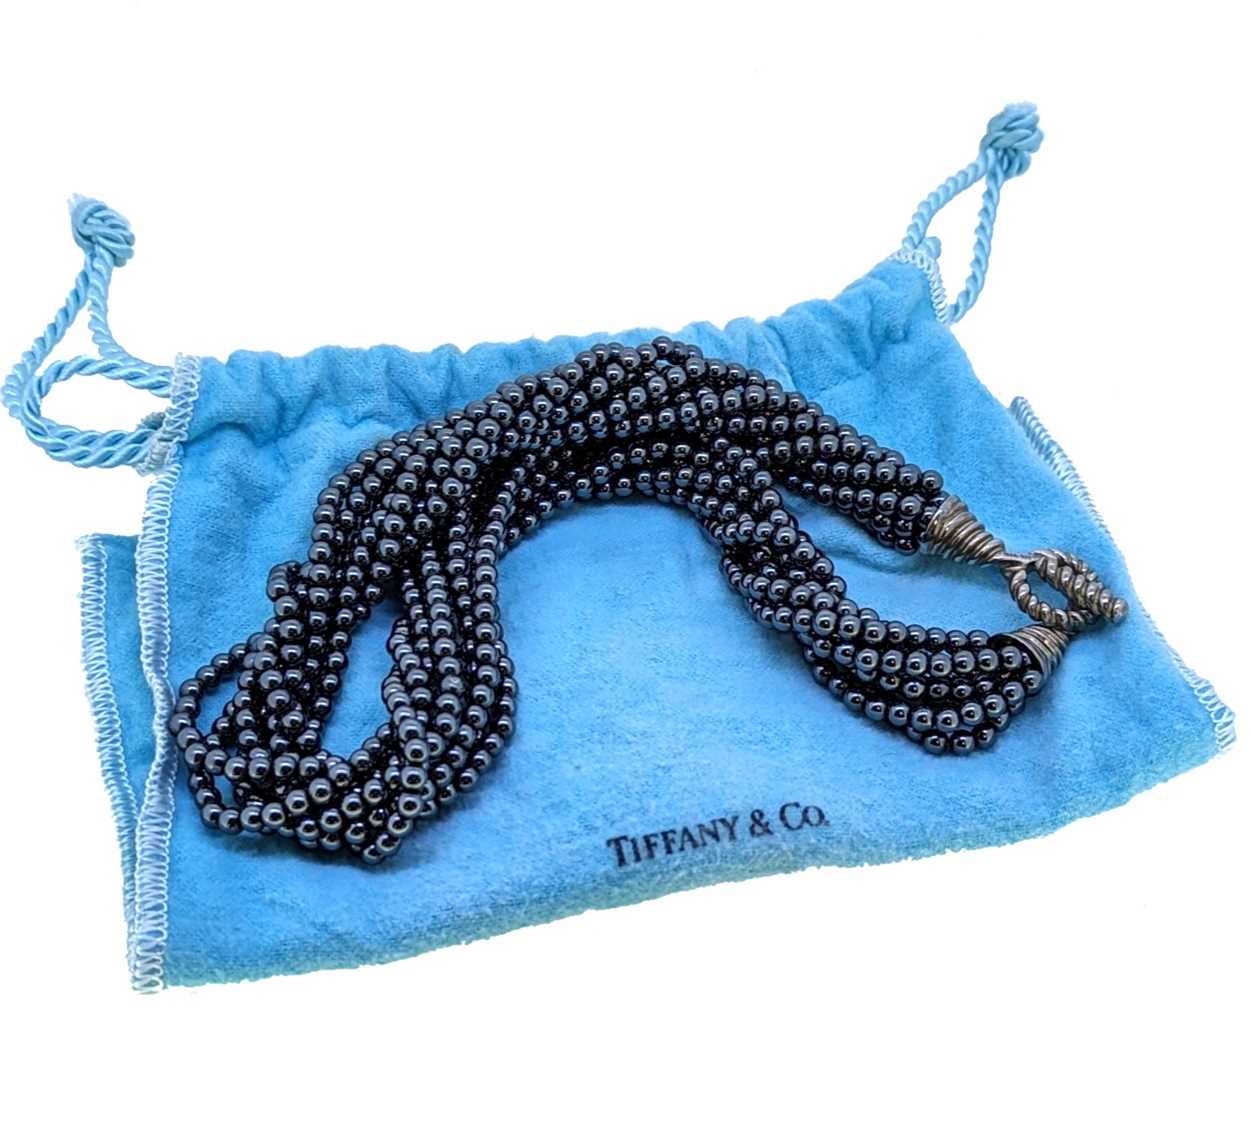 Tiffany & Co - A Hematite torsade necklace, - Image 3 of 4